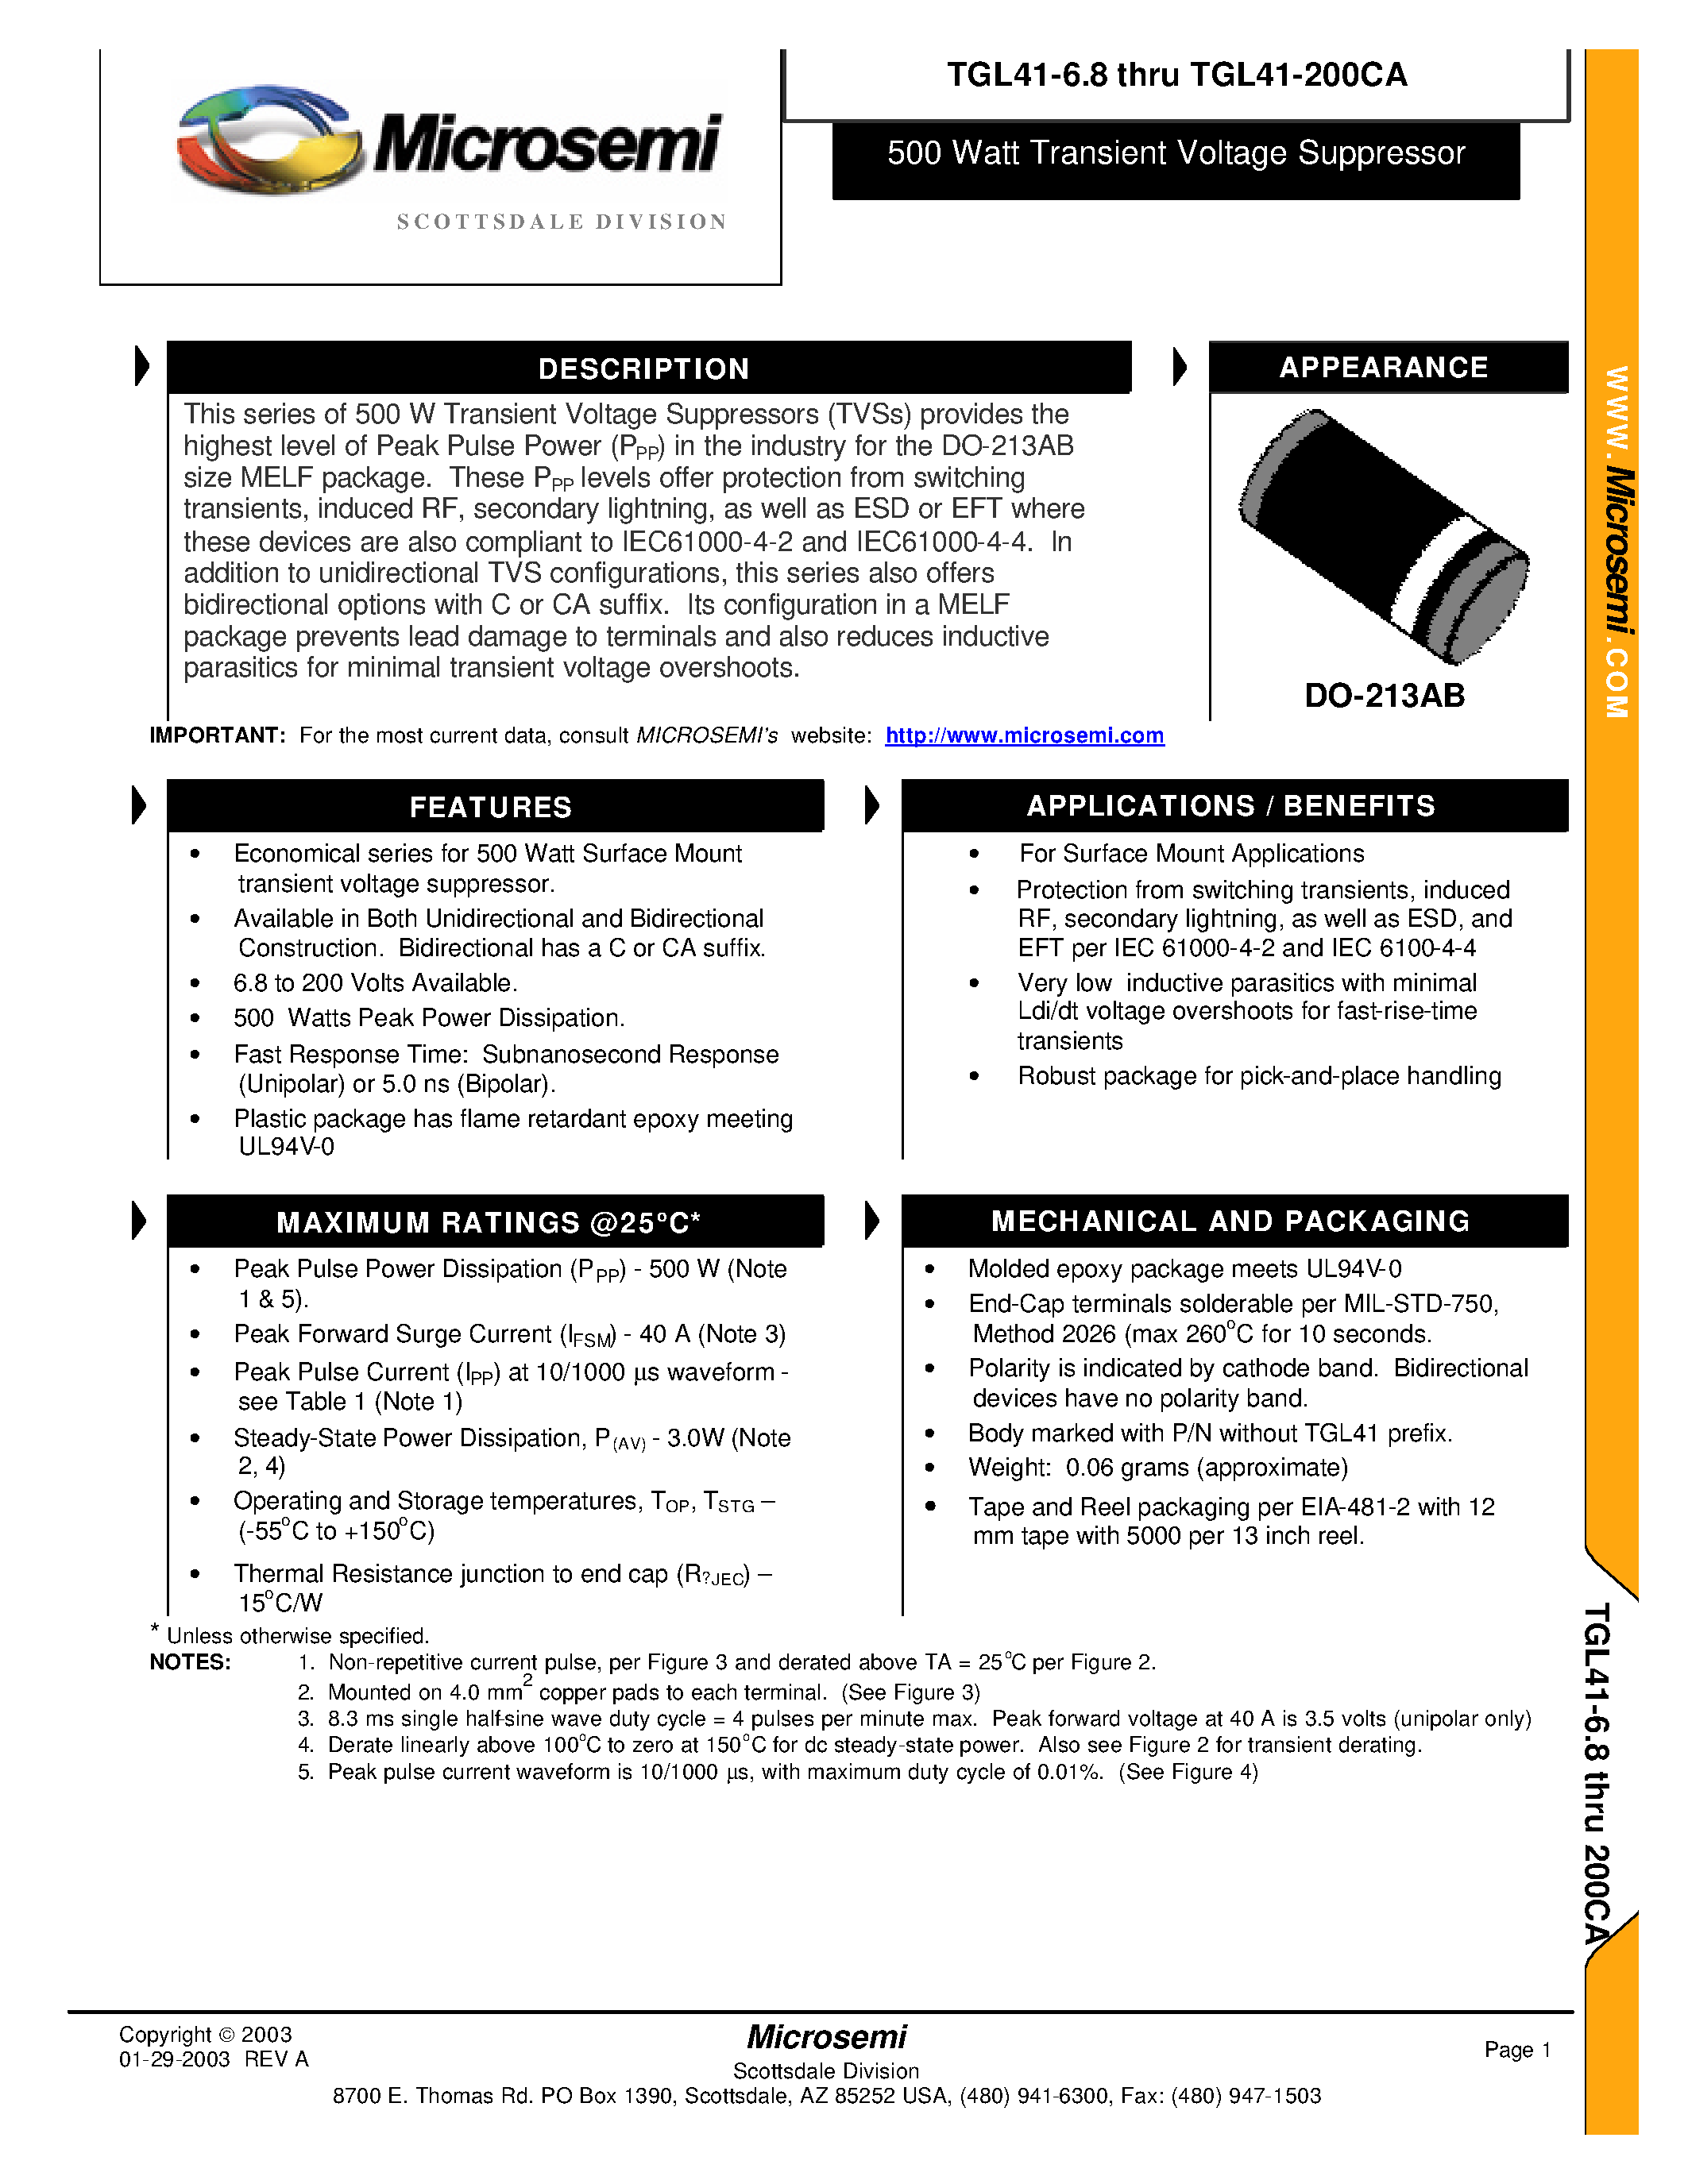 Datasheet TGL41-6.8 - 500 Watt Transient Voltage Suppressor page 1